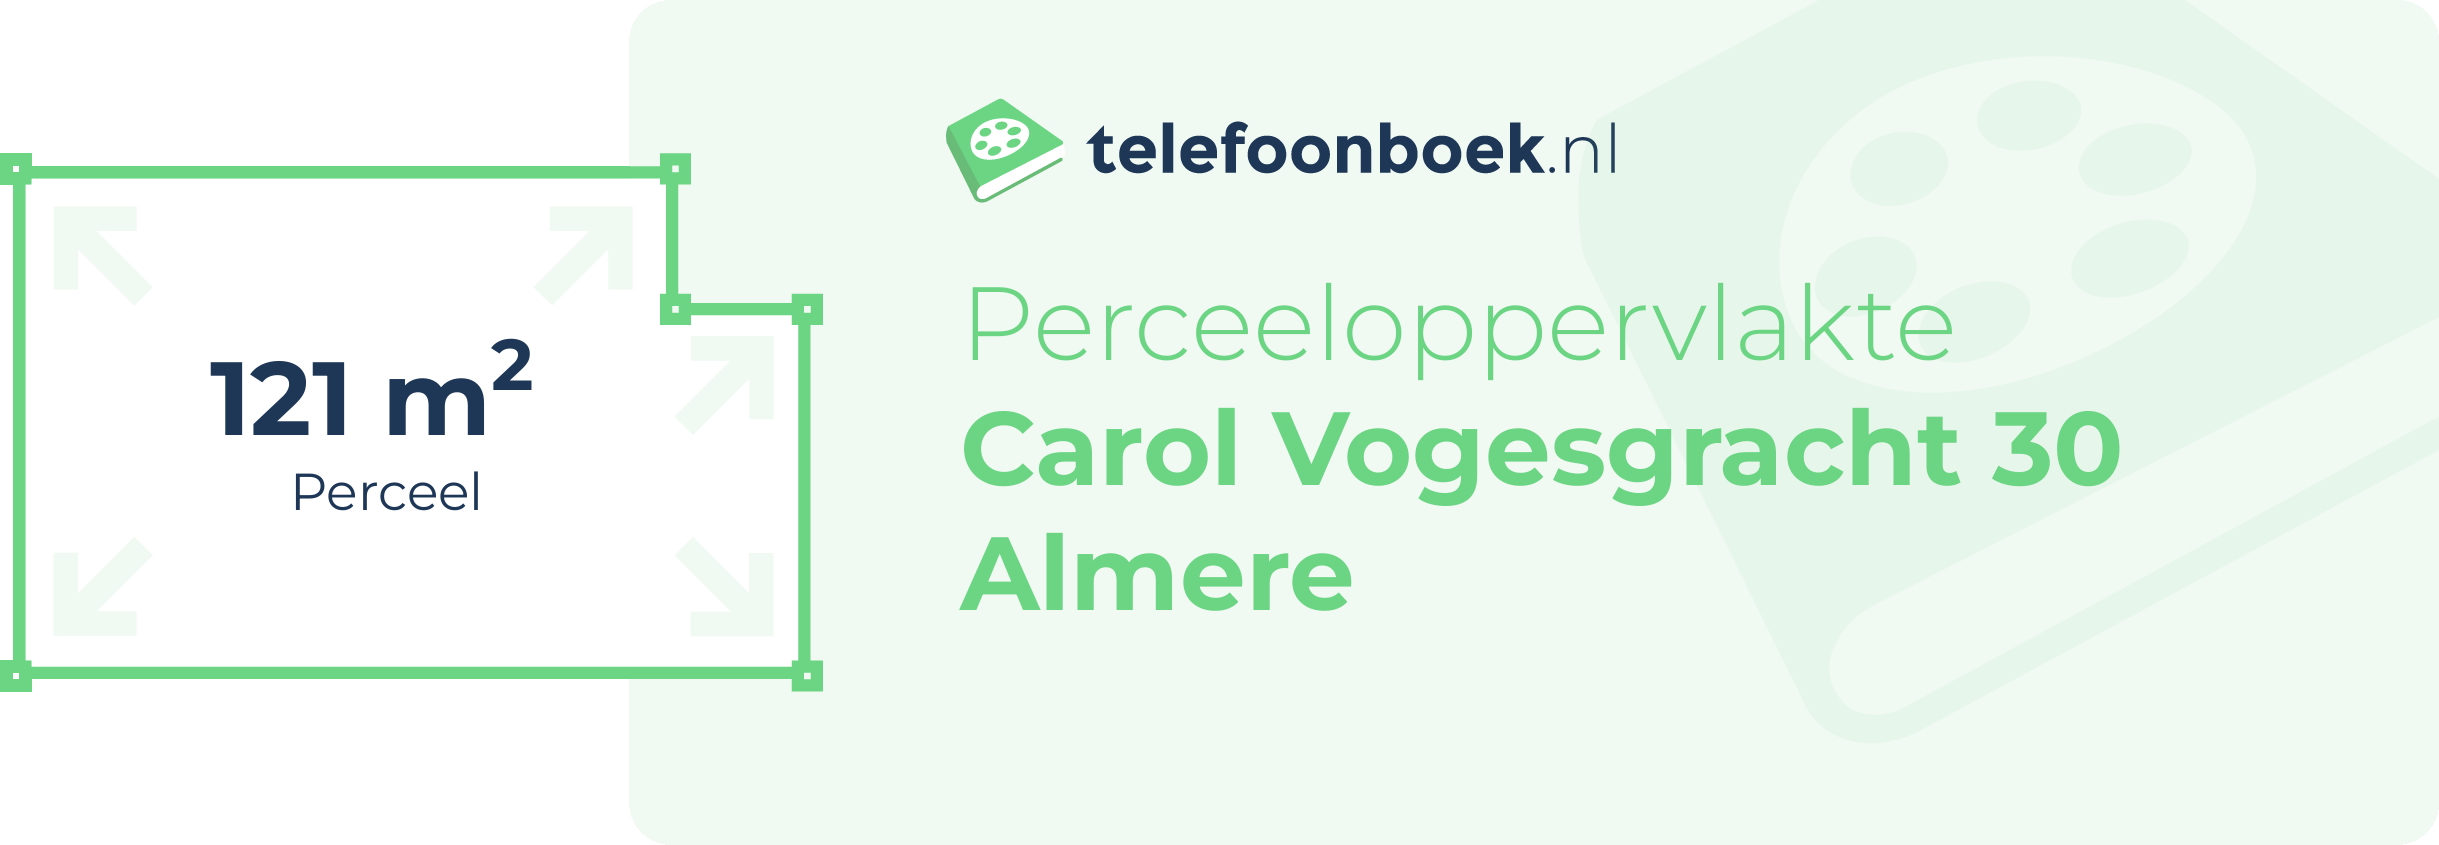 Perceeloppervlakte Carol Vogesgracht 30 Almere